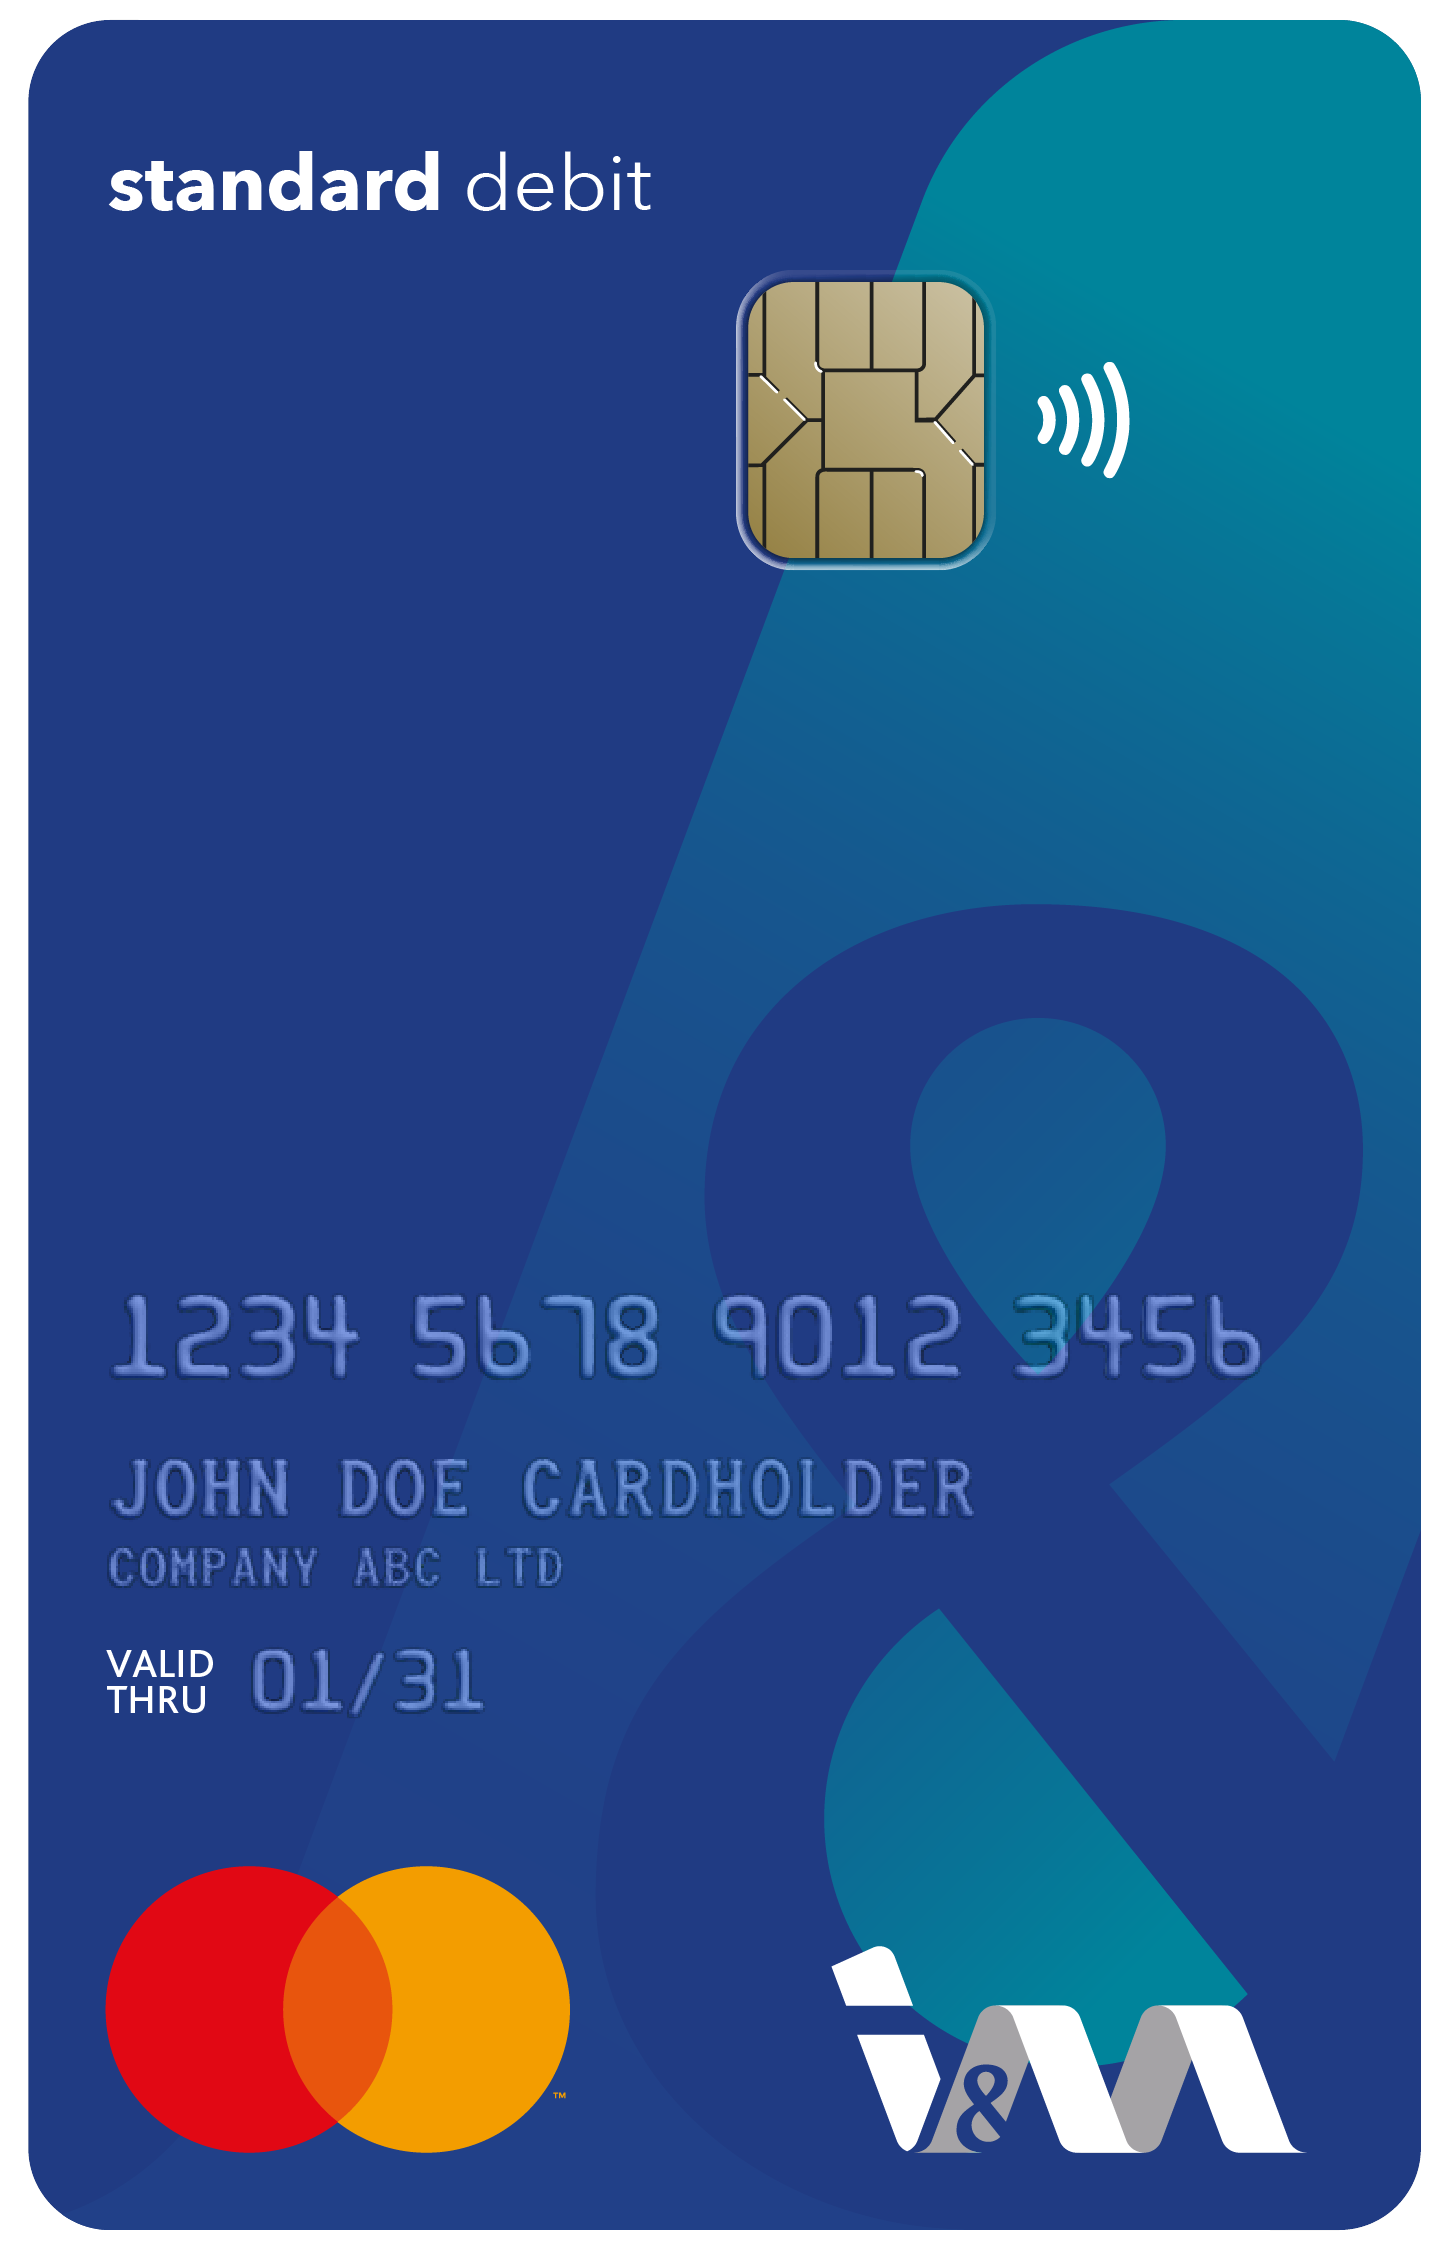 I&M Bank Uganda - I&M Bank Standard Debit Mastercard